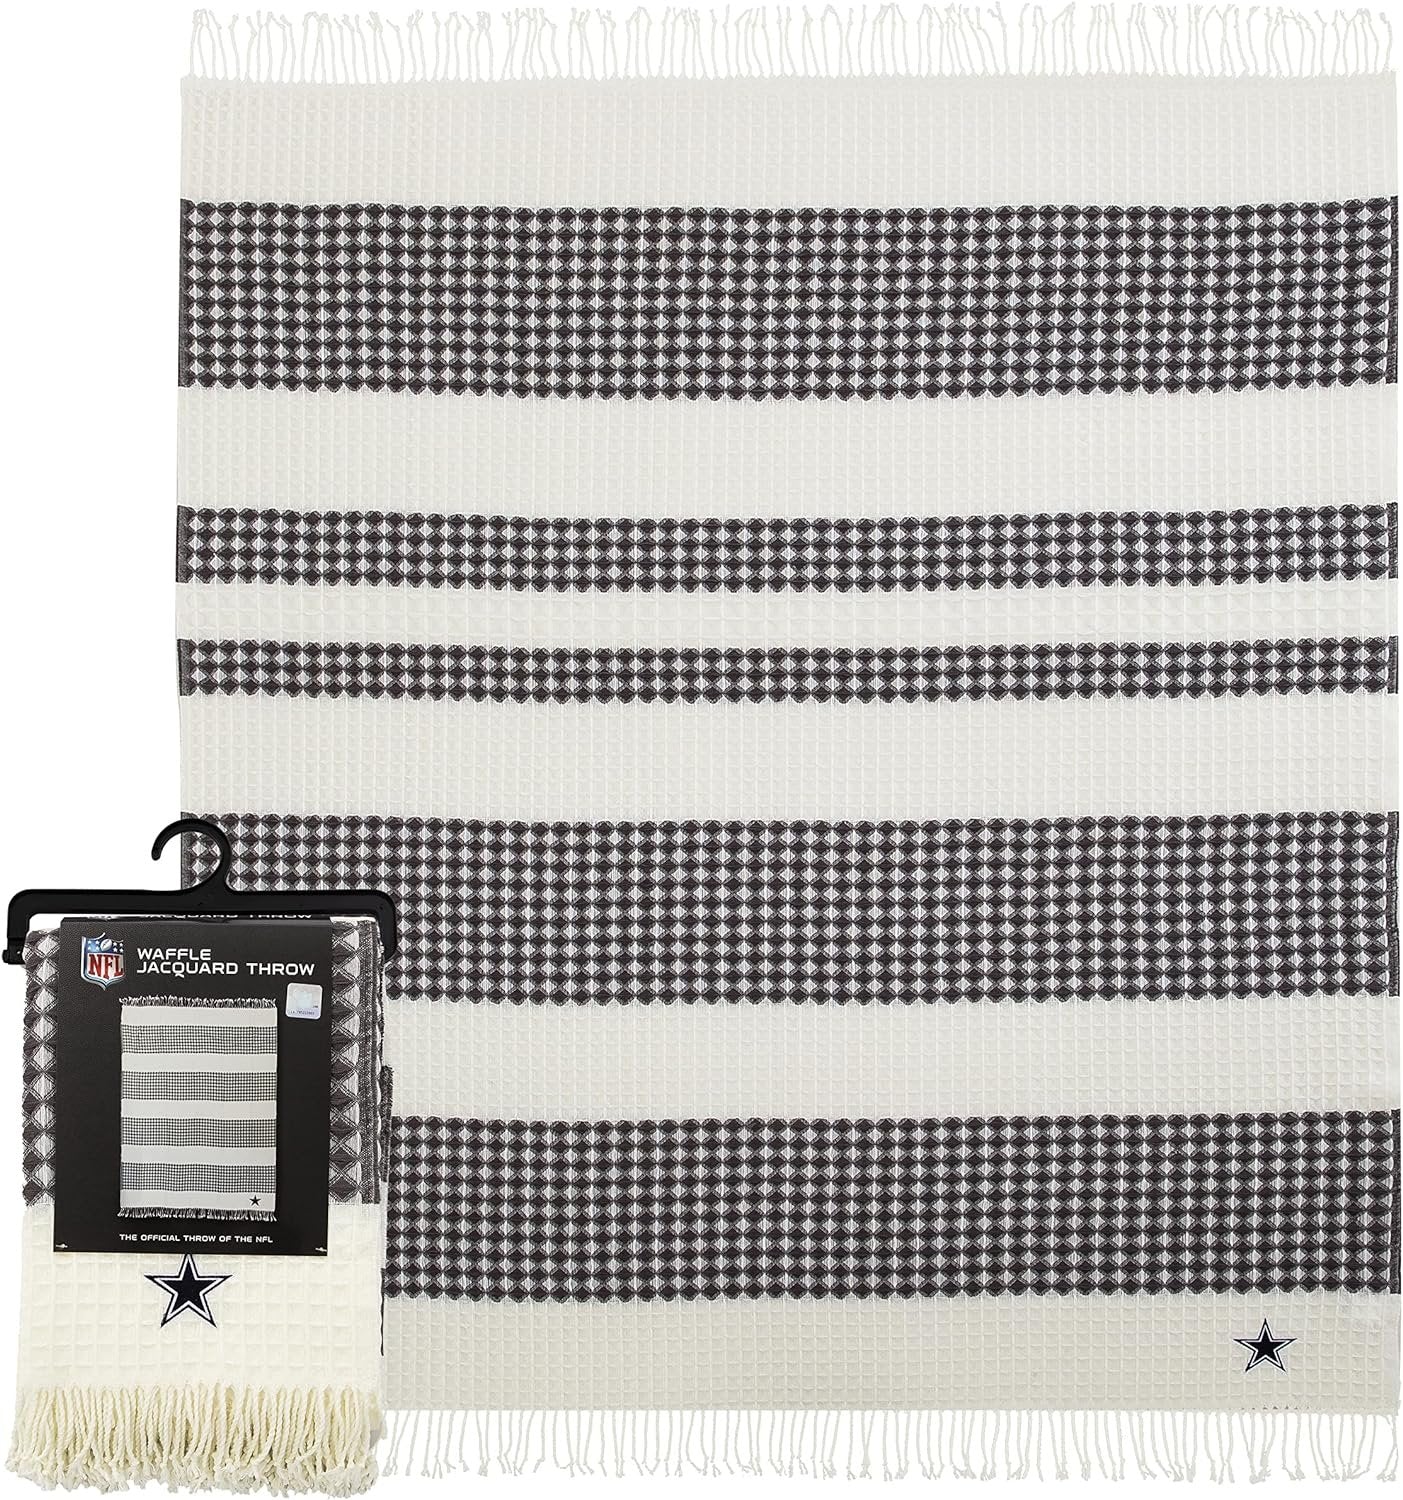 Dallas Cowboys Throw Blanket Waffle Weave Jacquard, 50x60 Inch, Unisex-Adult, 100% Acrylic